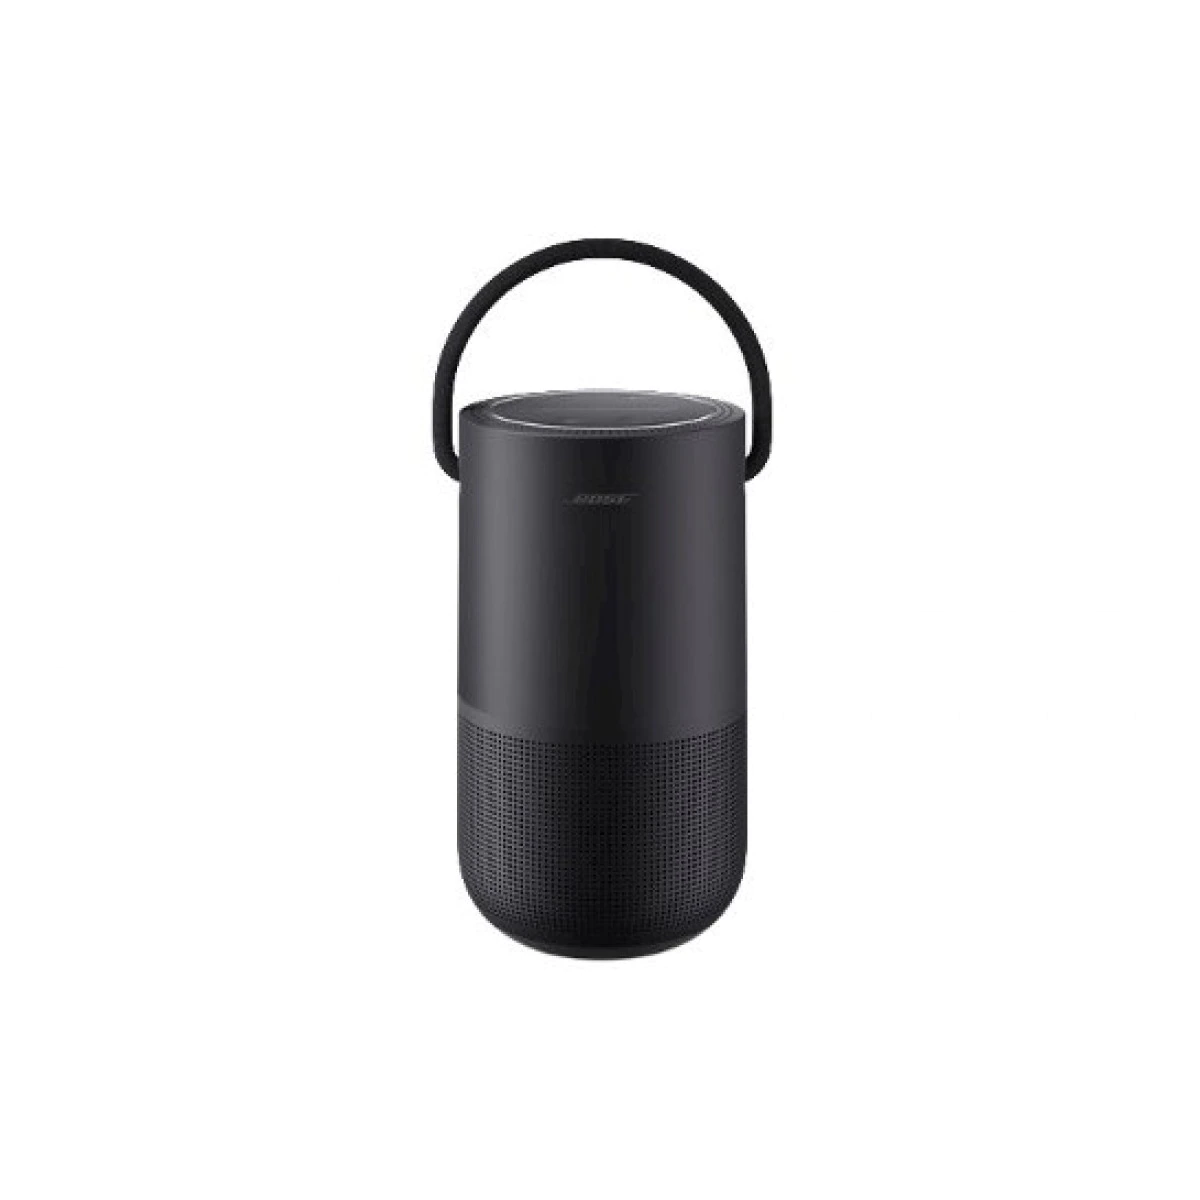 Coluna portátil Bose Portable Home Speaker - Preto